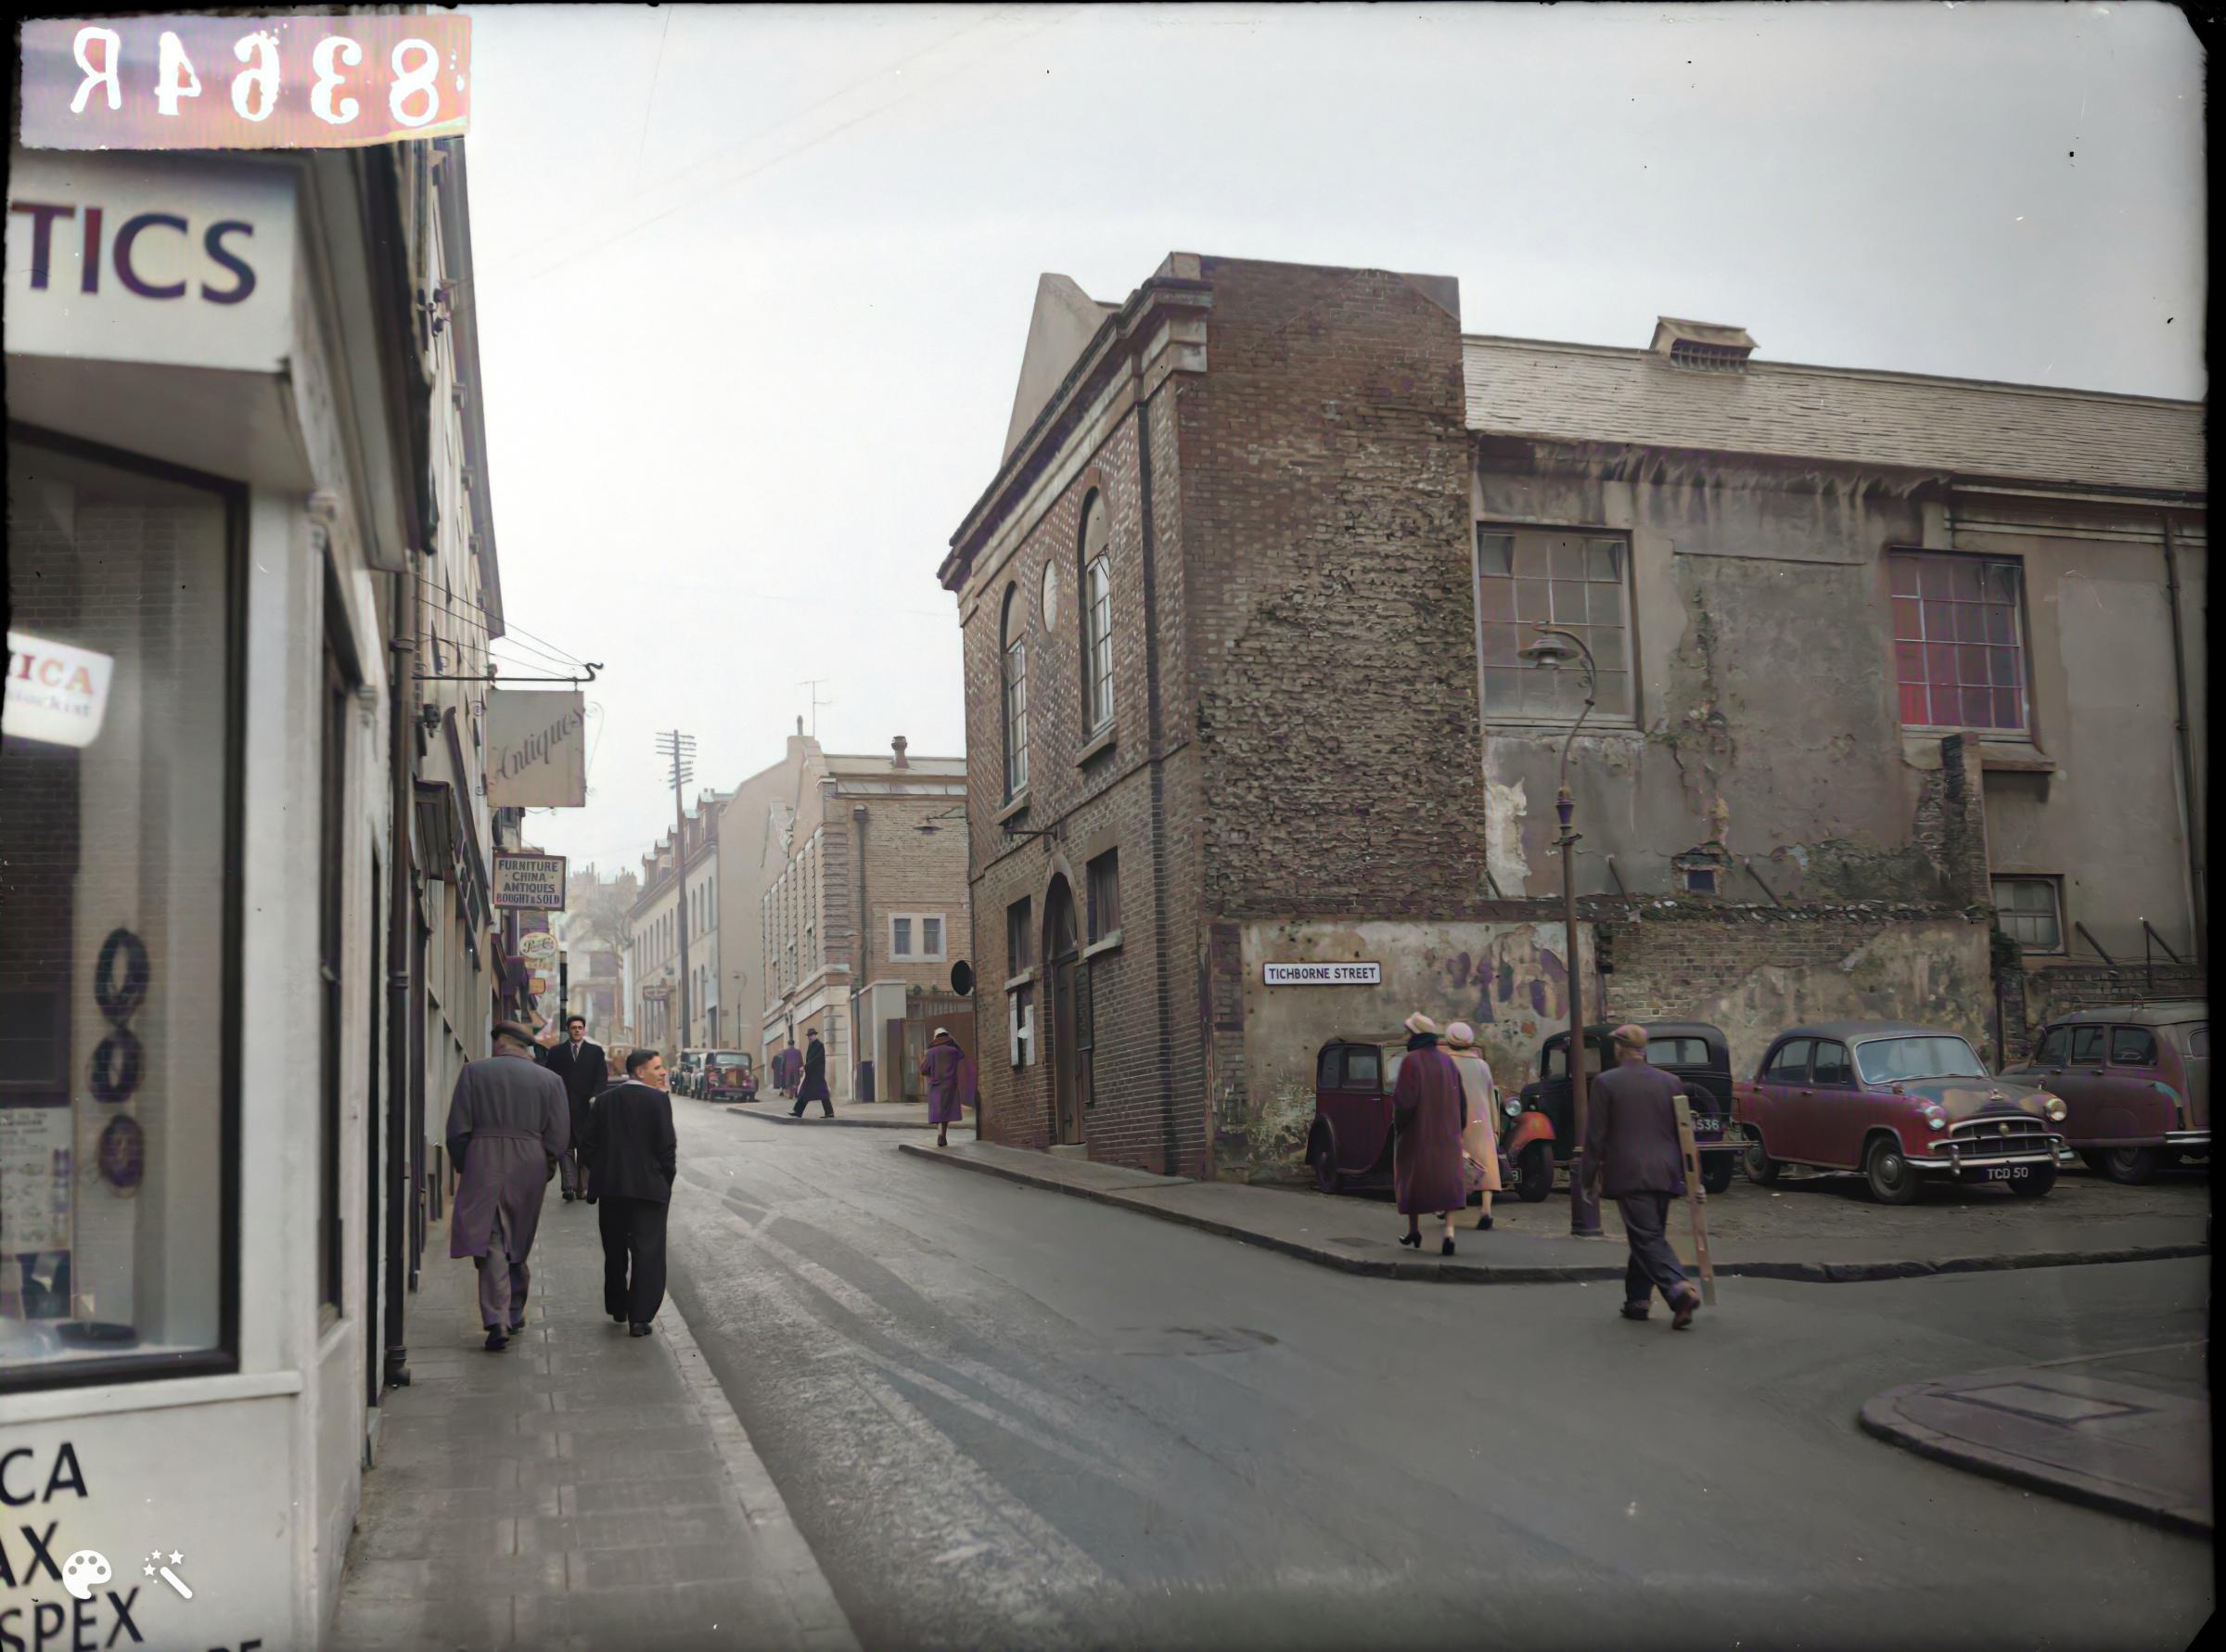 Tichborne Street, Brighton, in 1960